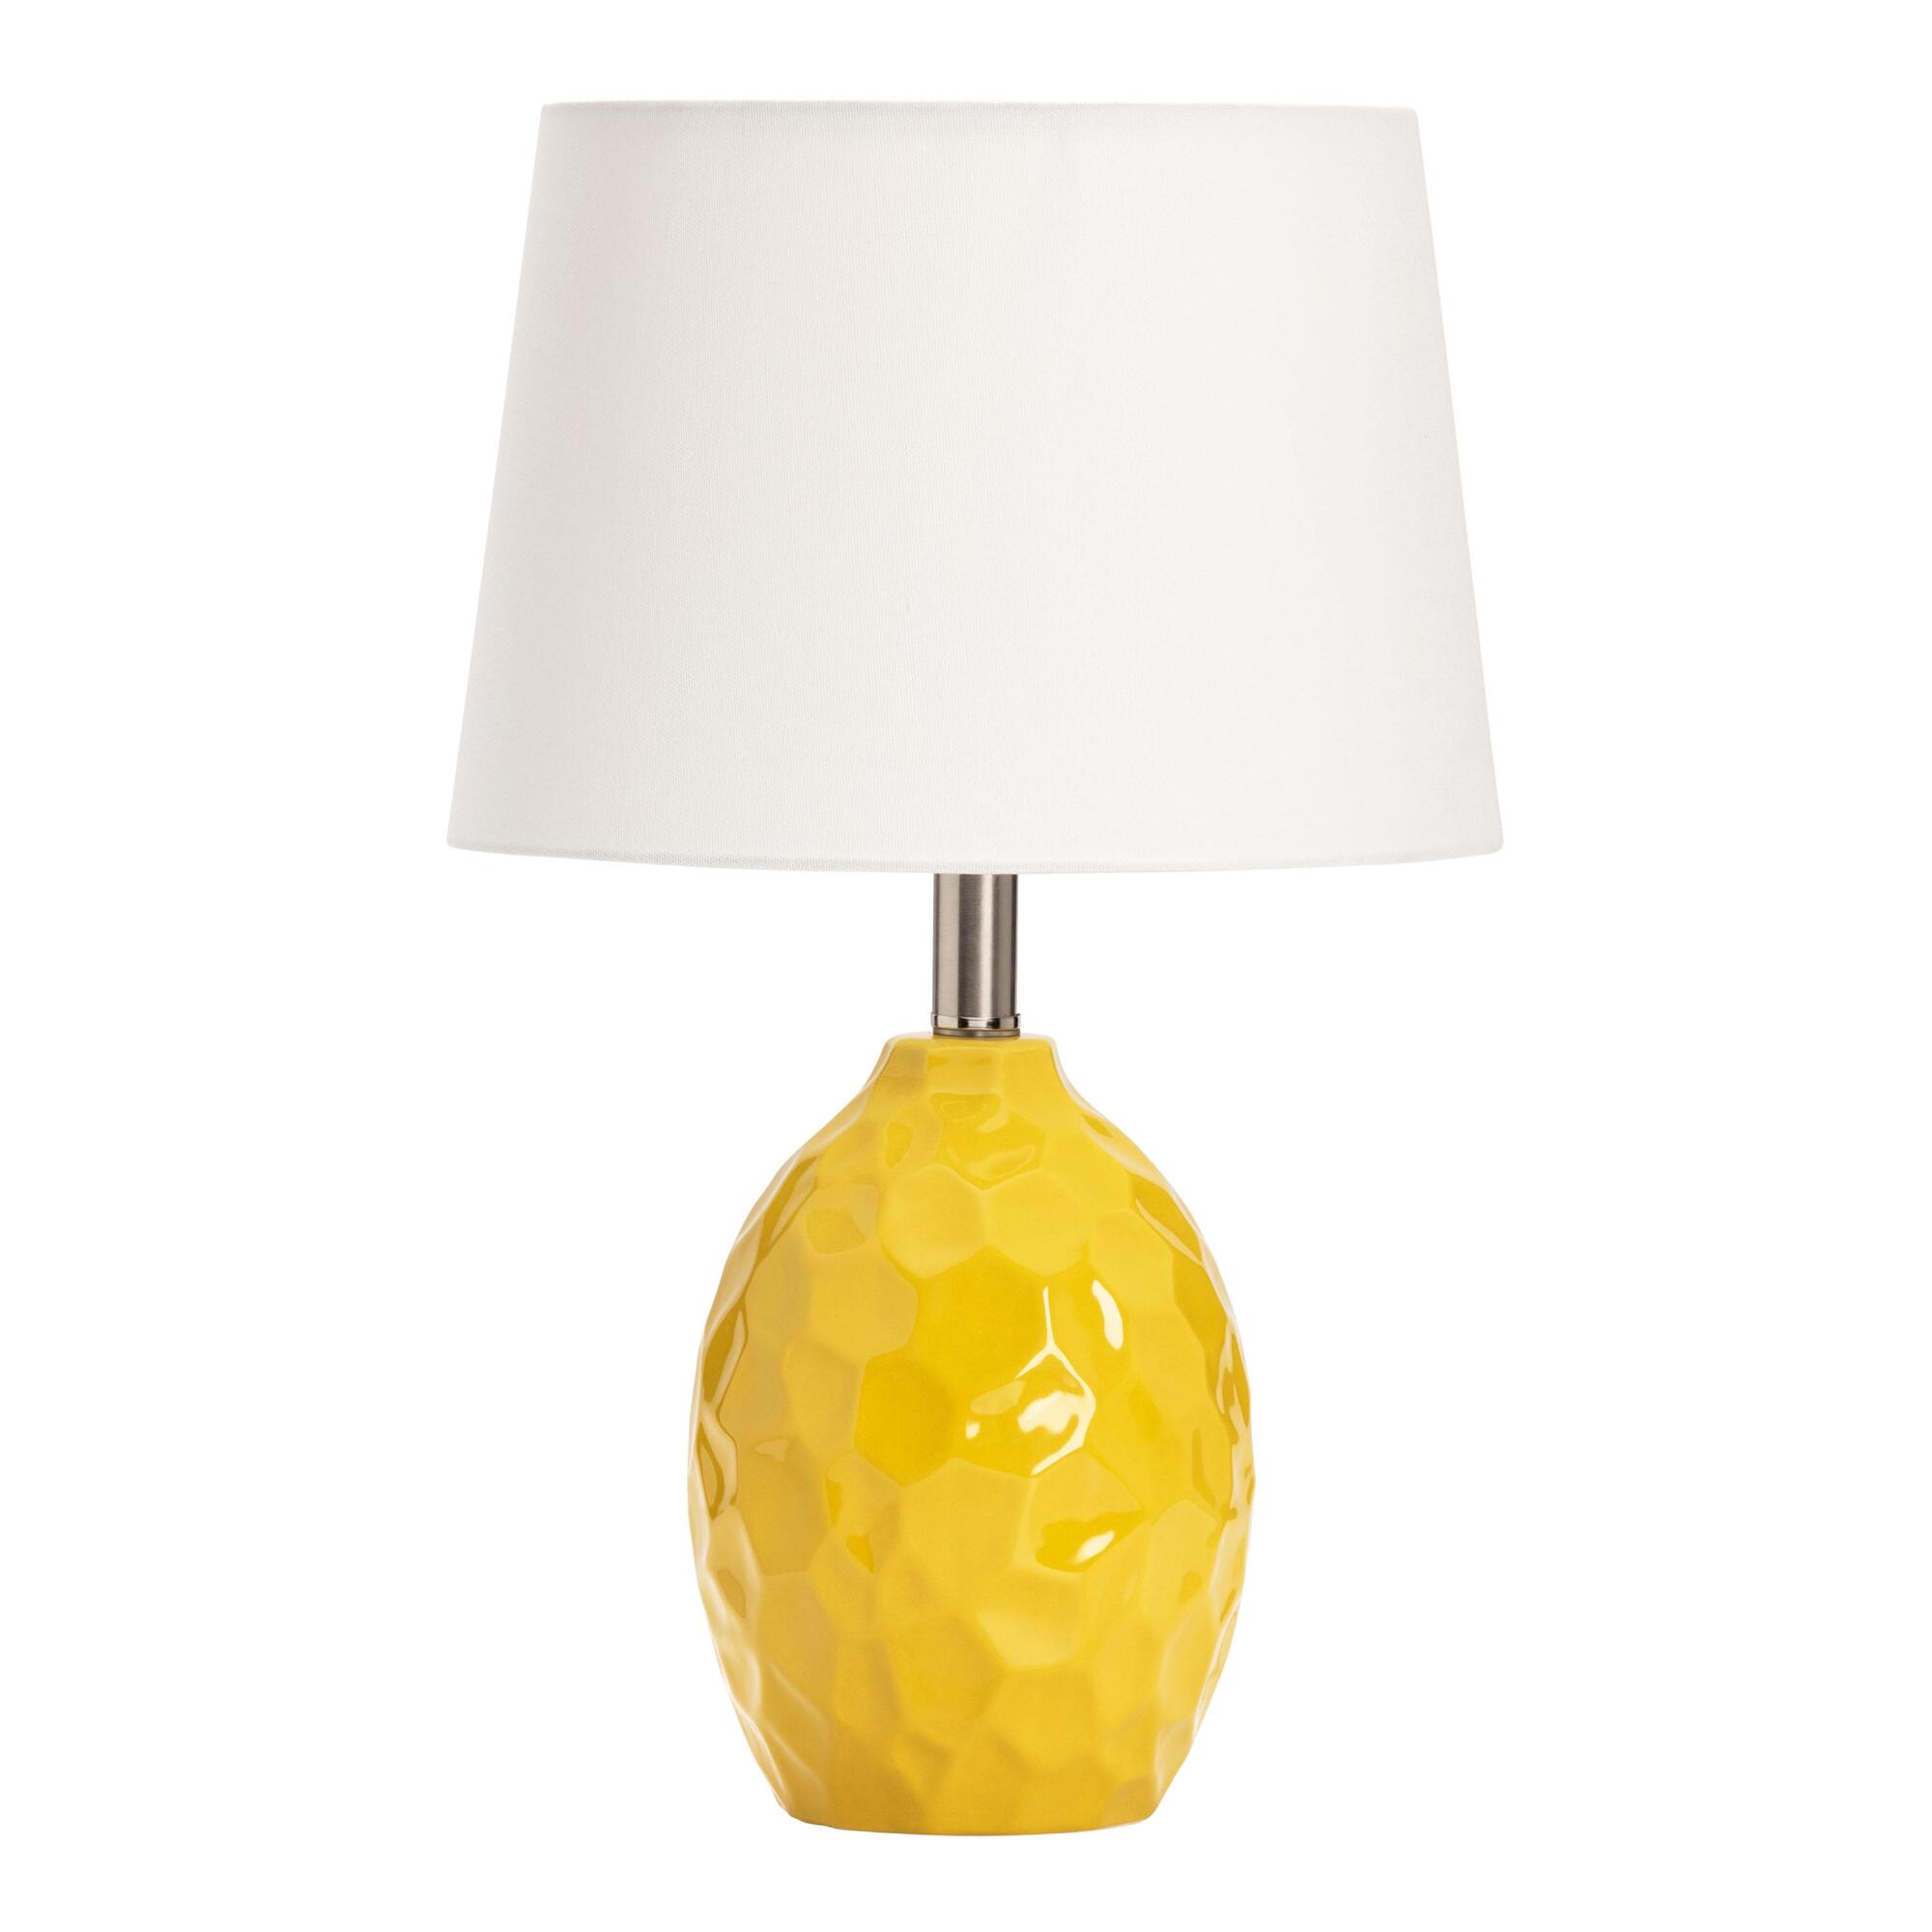 Ceramic Geometric Dix Table Lamp: Yellow by World Market